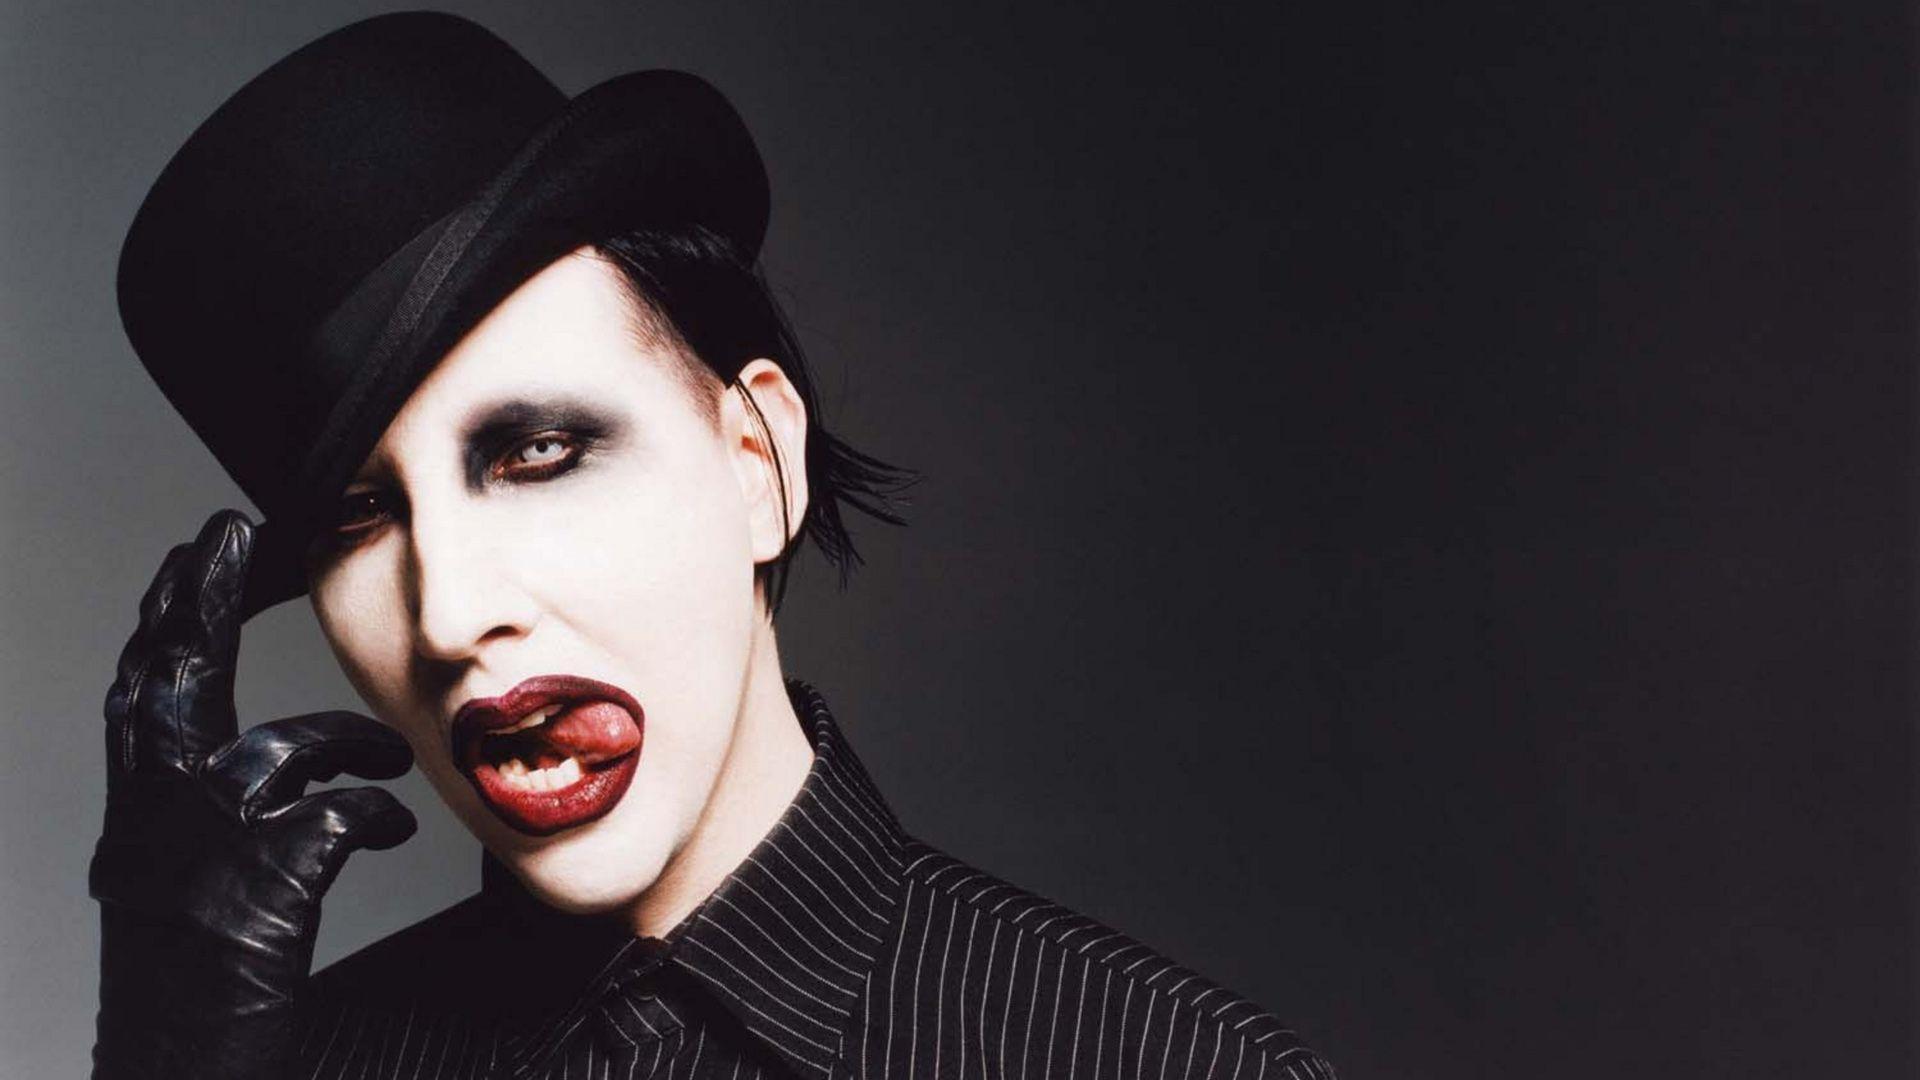 Fonds d&;écran Marilyn Manson, tous les wallpaper Marilyn Manson